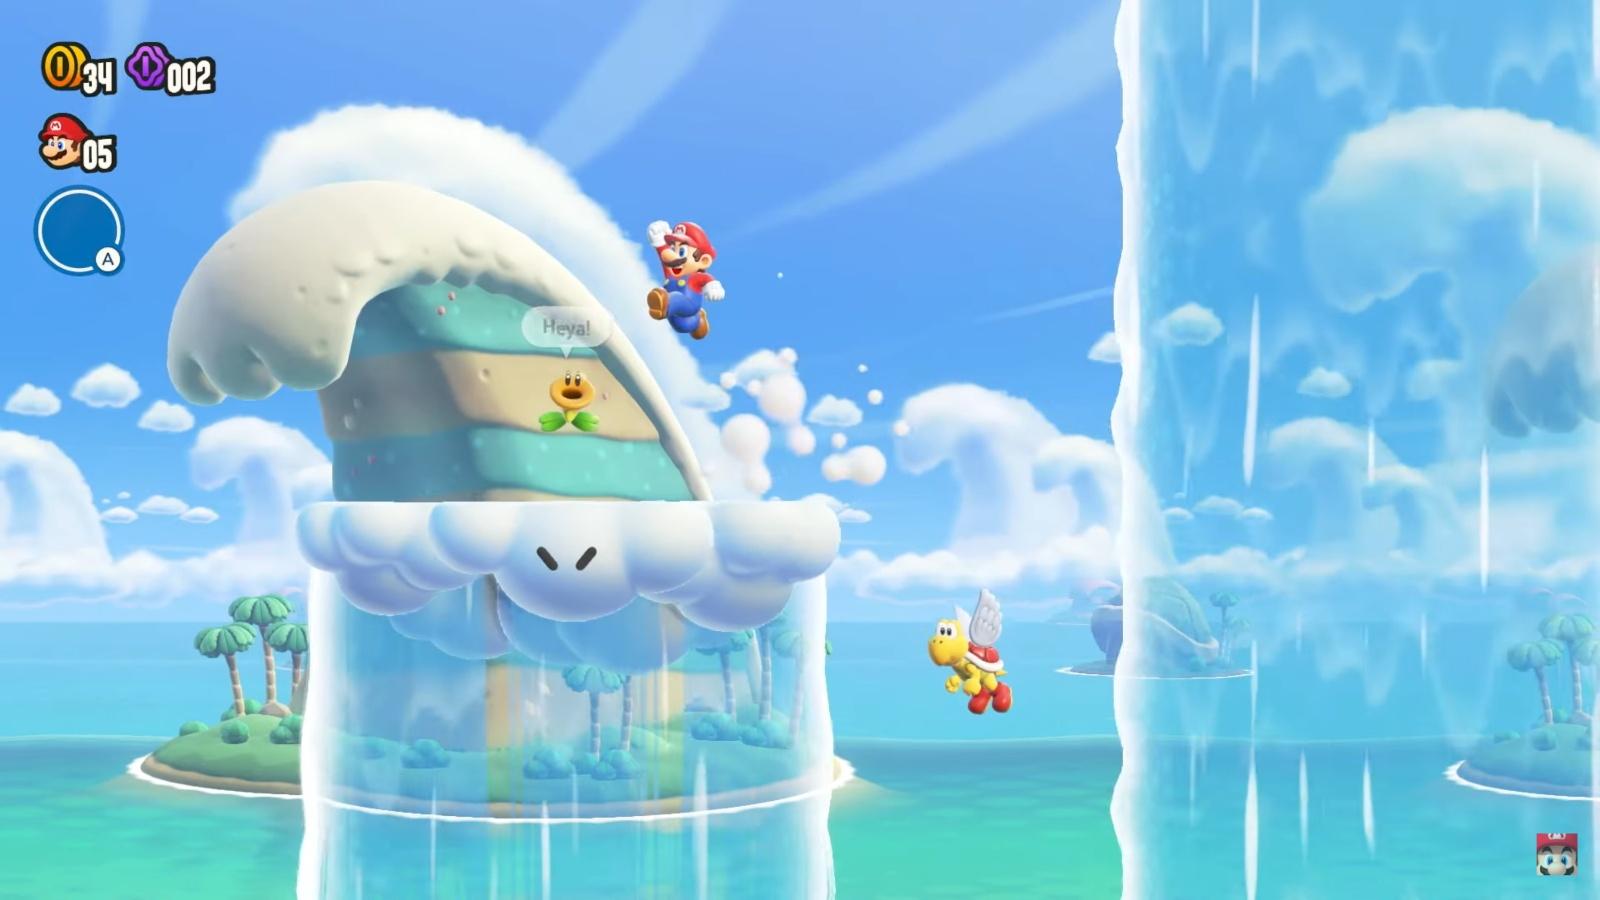 A screenshot of Super Mario Bros from the Nintendo Direct trailer